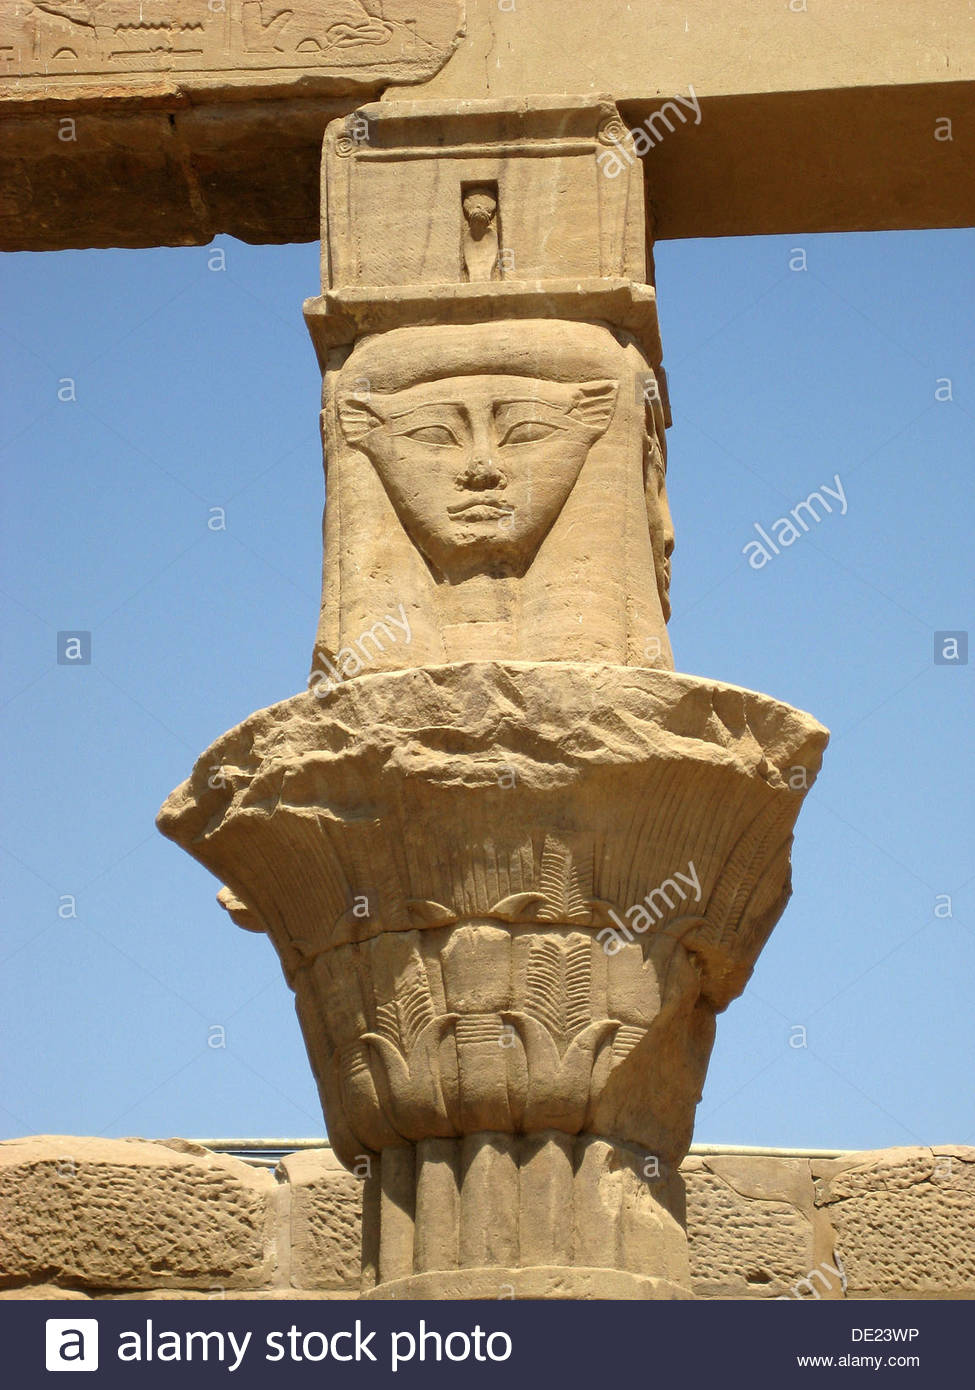 46 - Hathor the Egyptian goddess, Ninhursag the Mesopotamian goddess